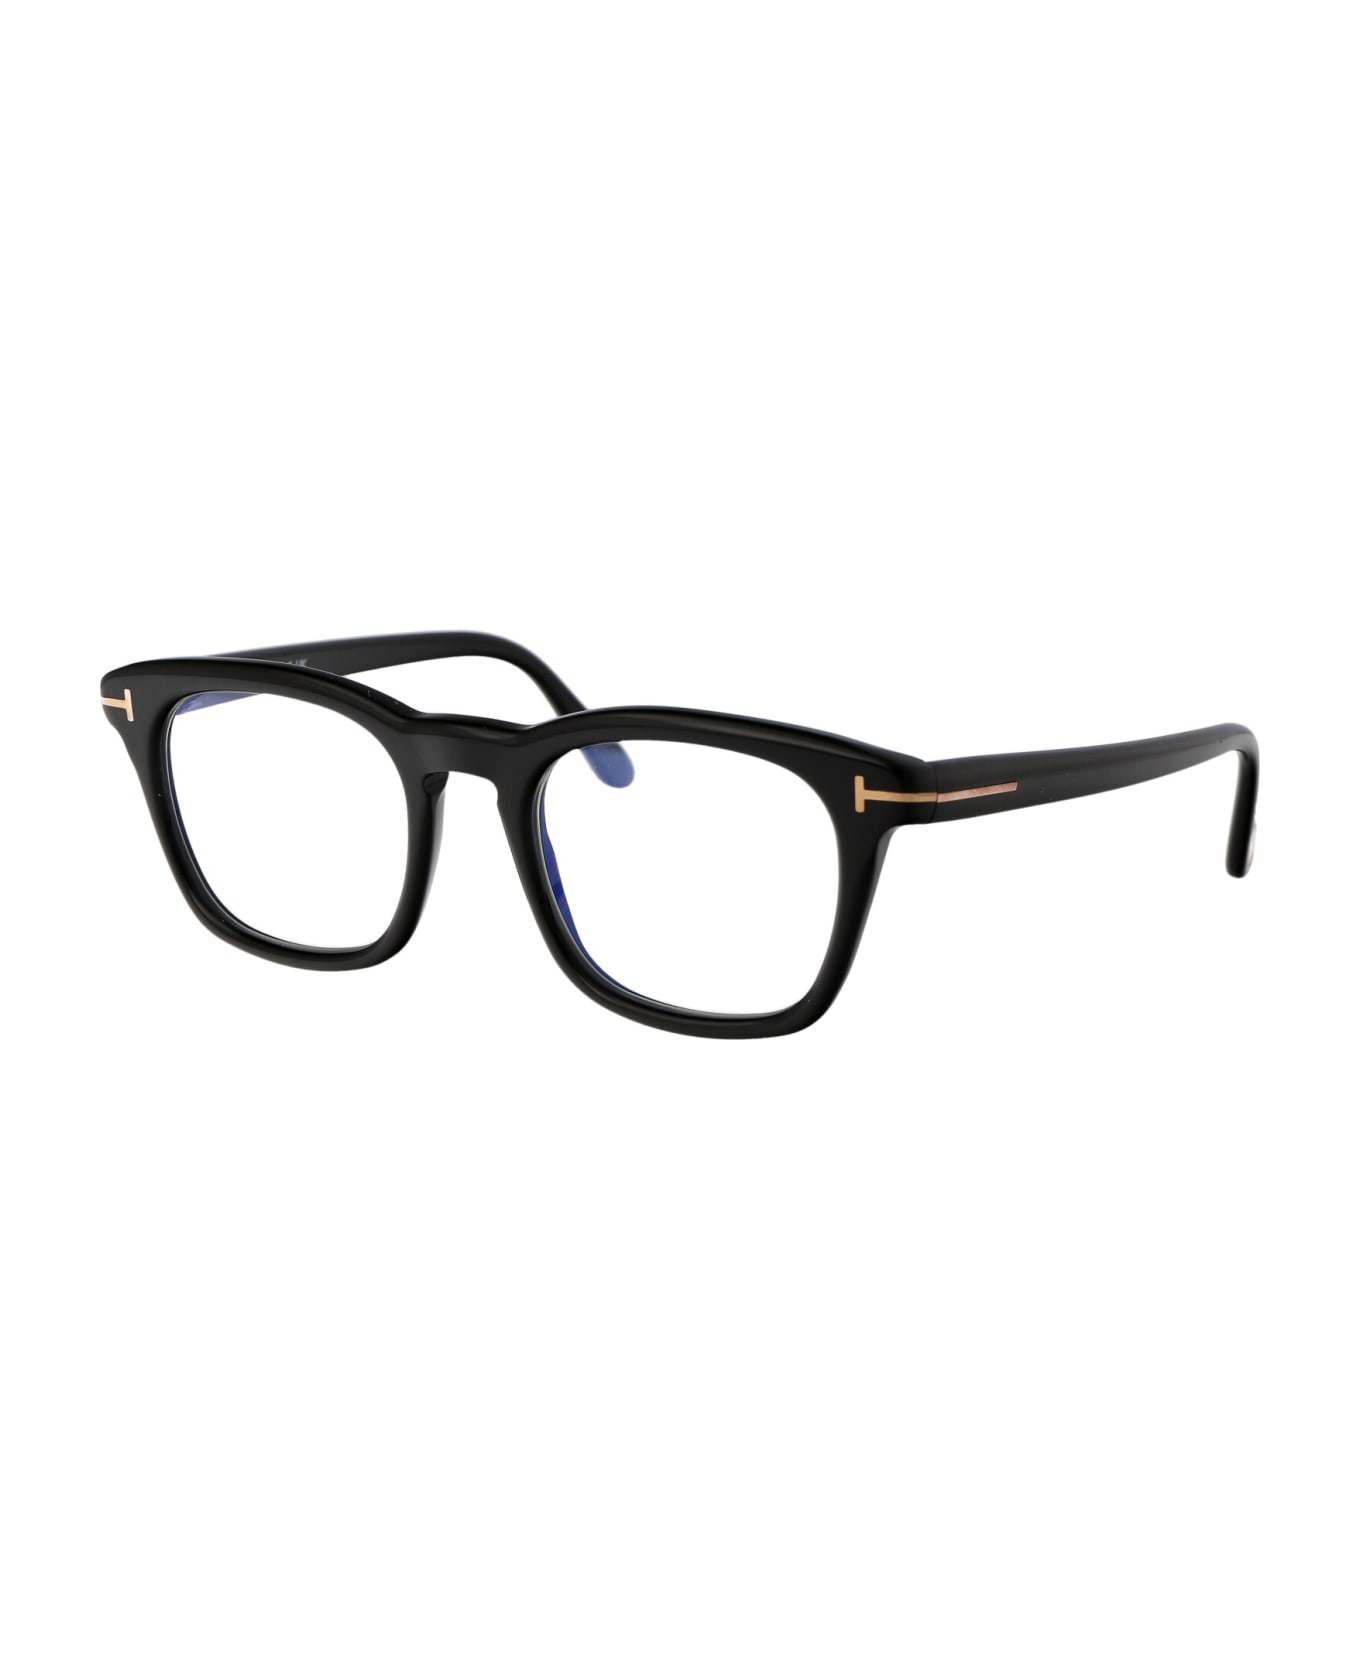 Tom Ford Eyewear Ft5870-b Glasses - 001 Nero Lucido アイウェア